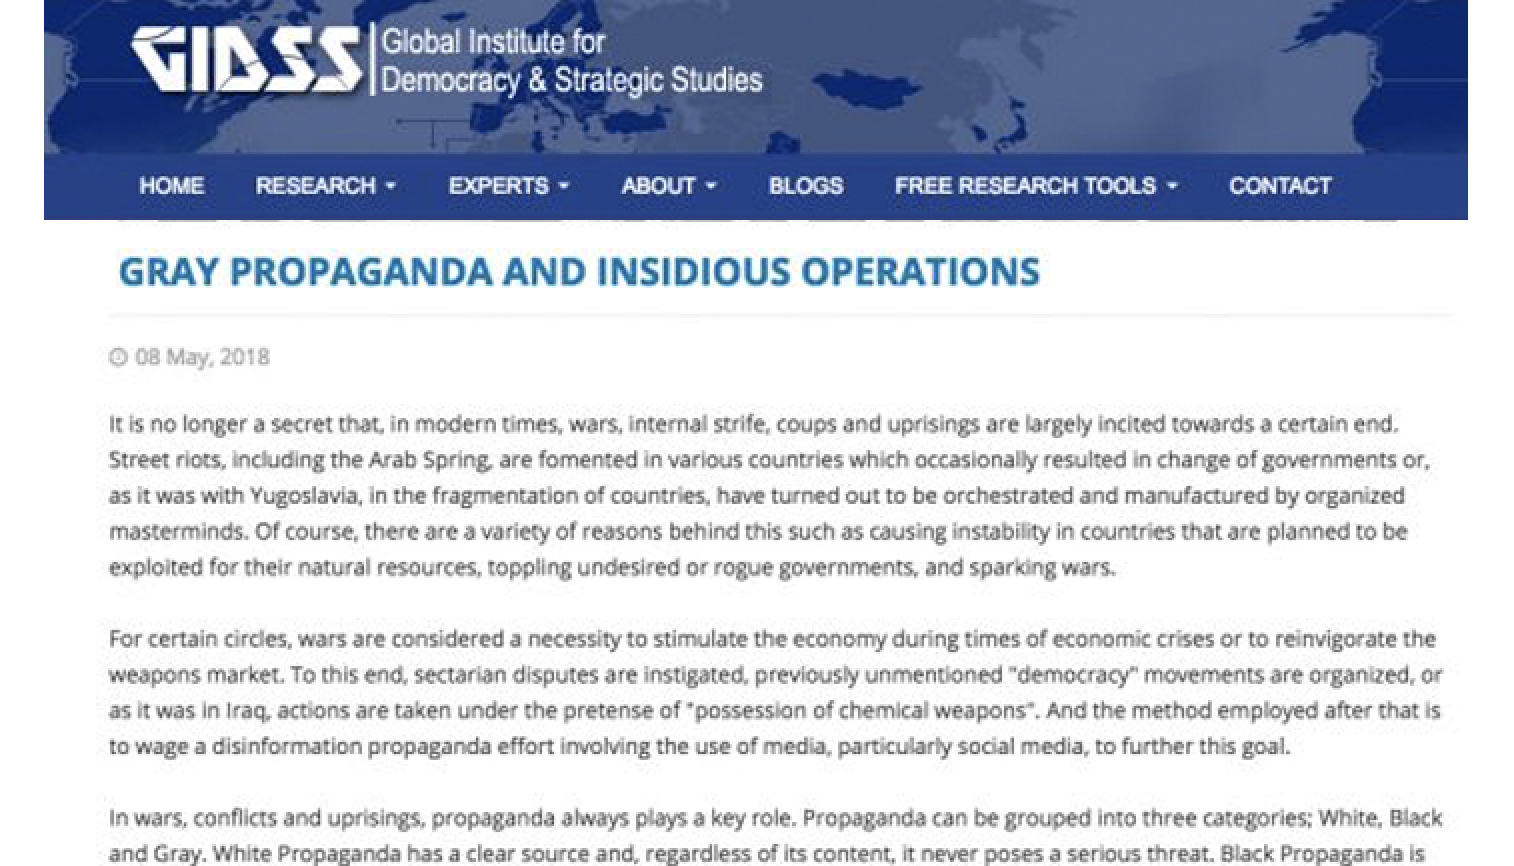 Grey propaganda and insidious operations